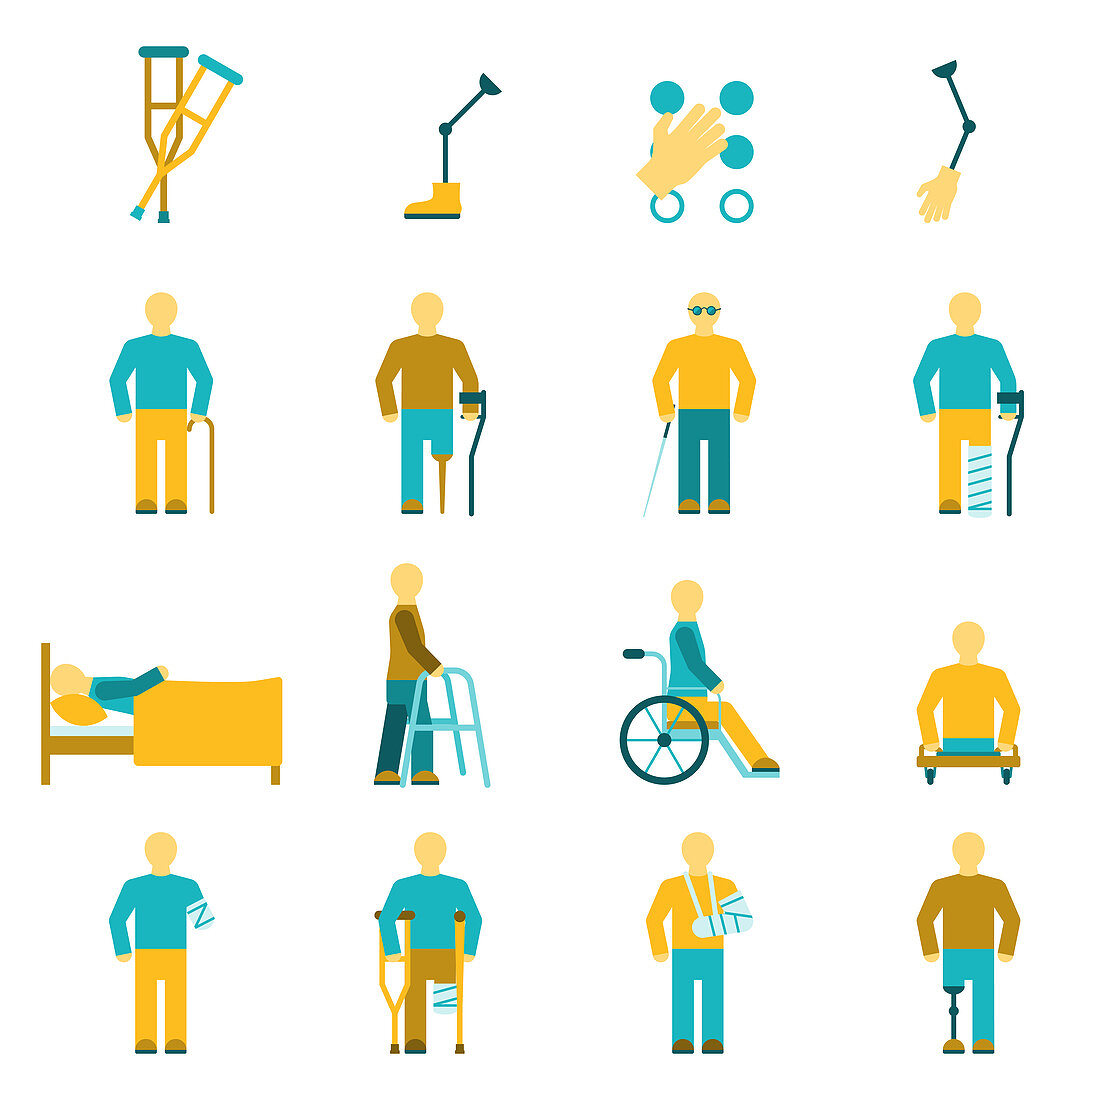 Disability icons, illustration